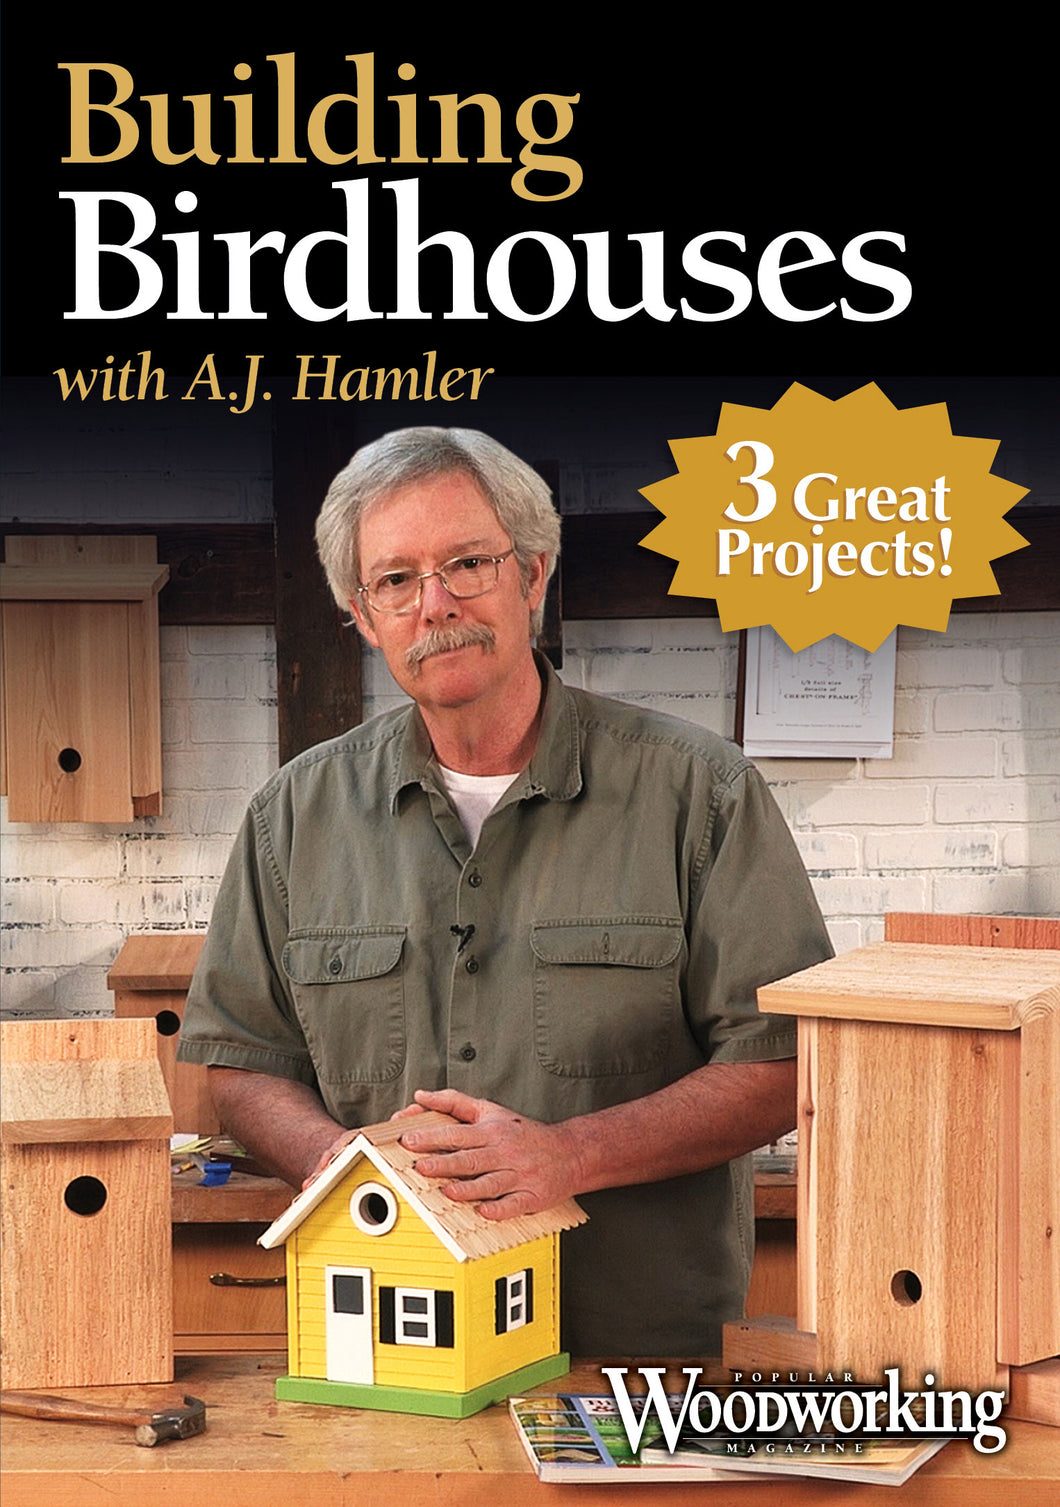 Building Birdhouses with A.J. Hamler  Video Download